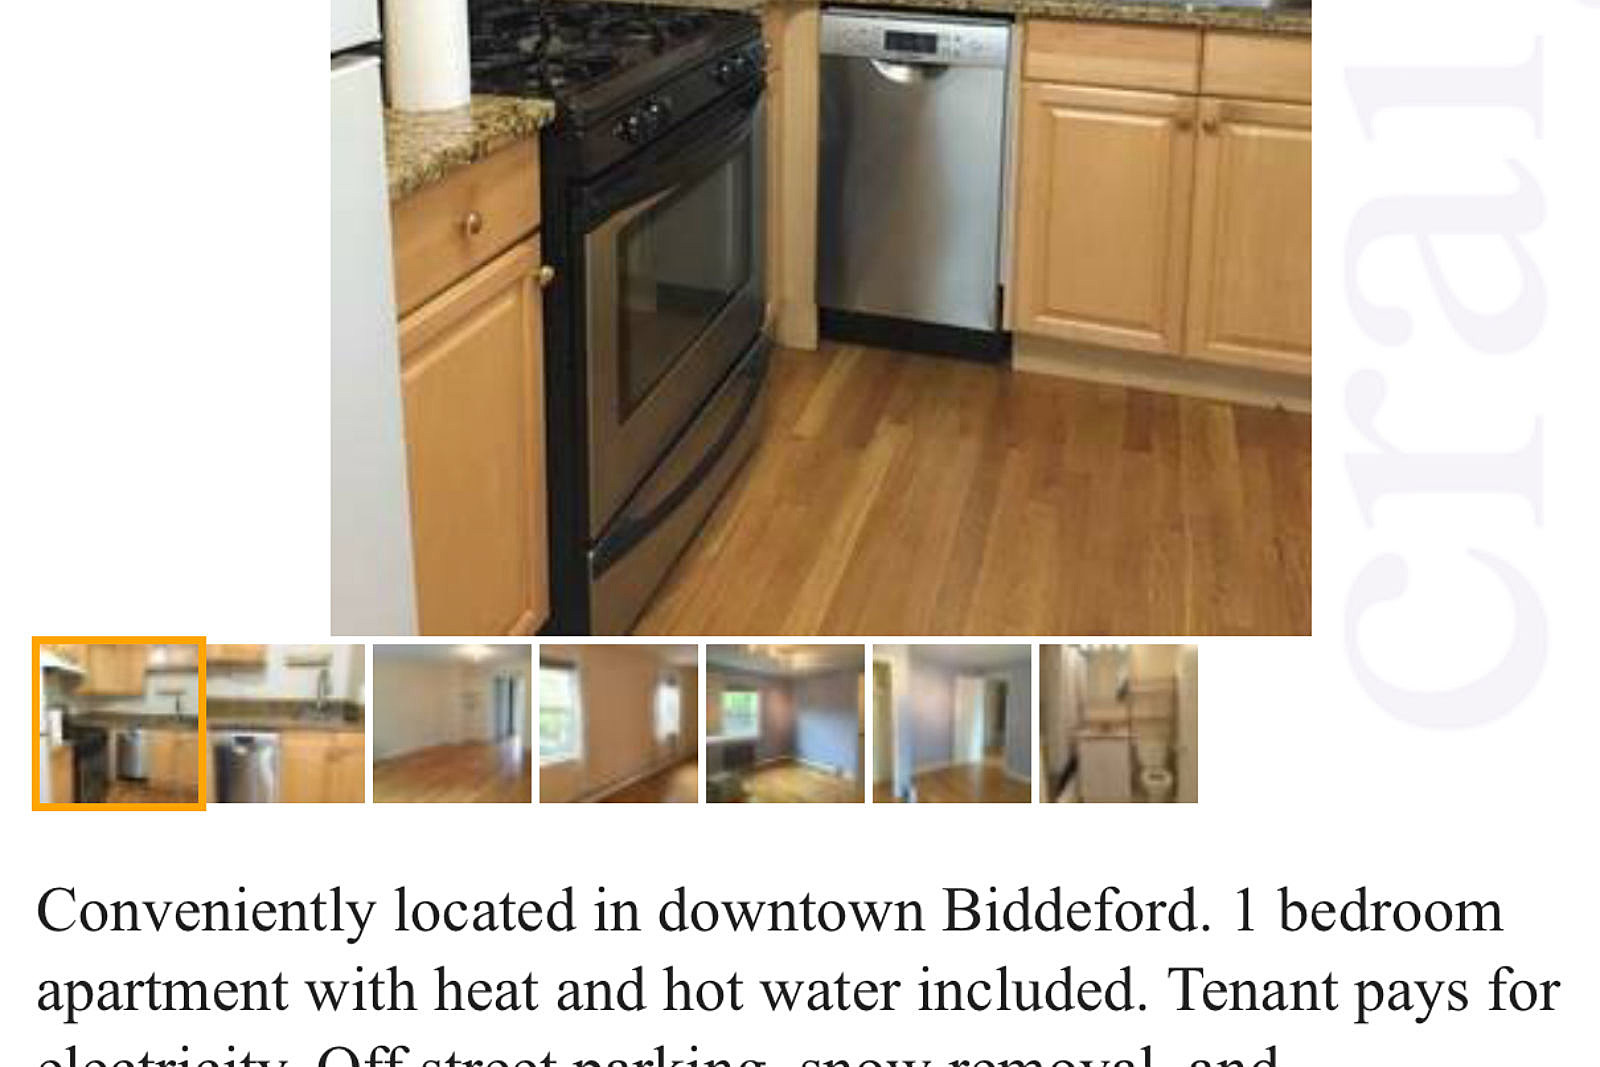 Craigslist Apartment Ad From Biddeford Suggests Blacks Should Not